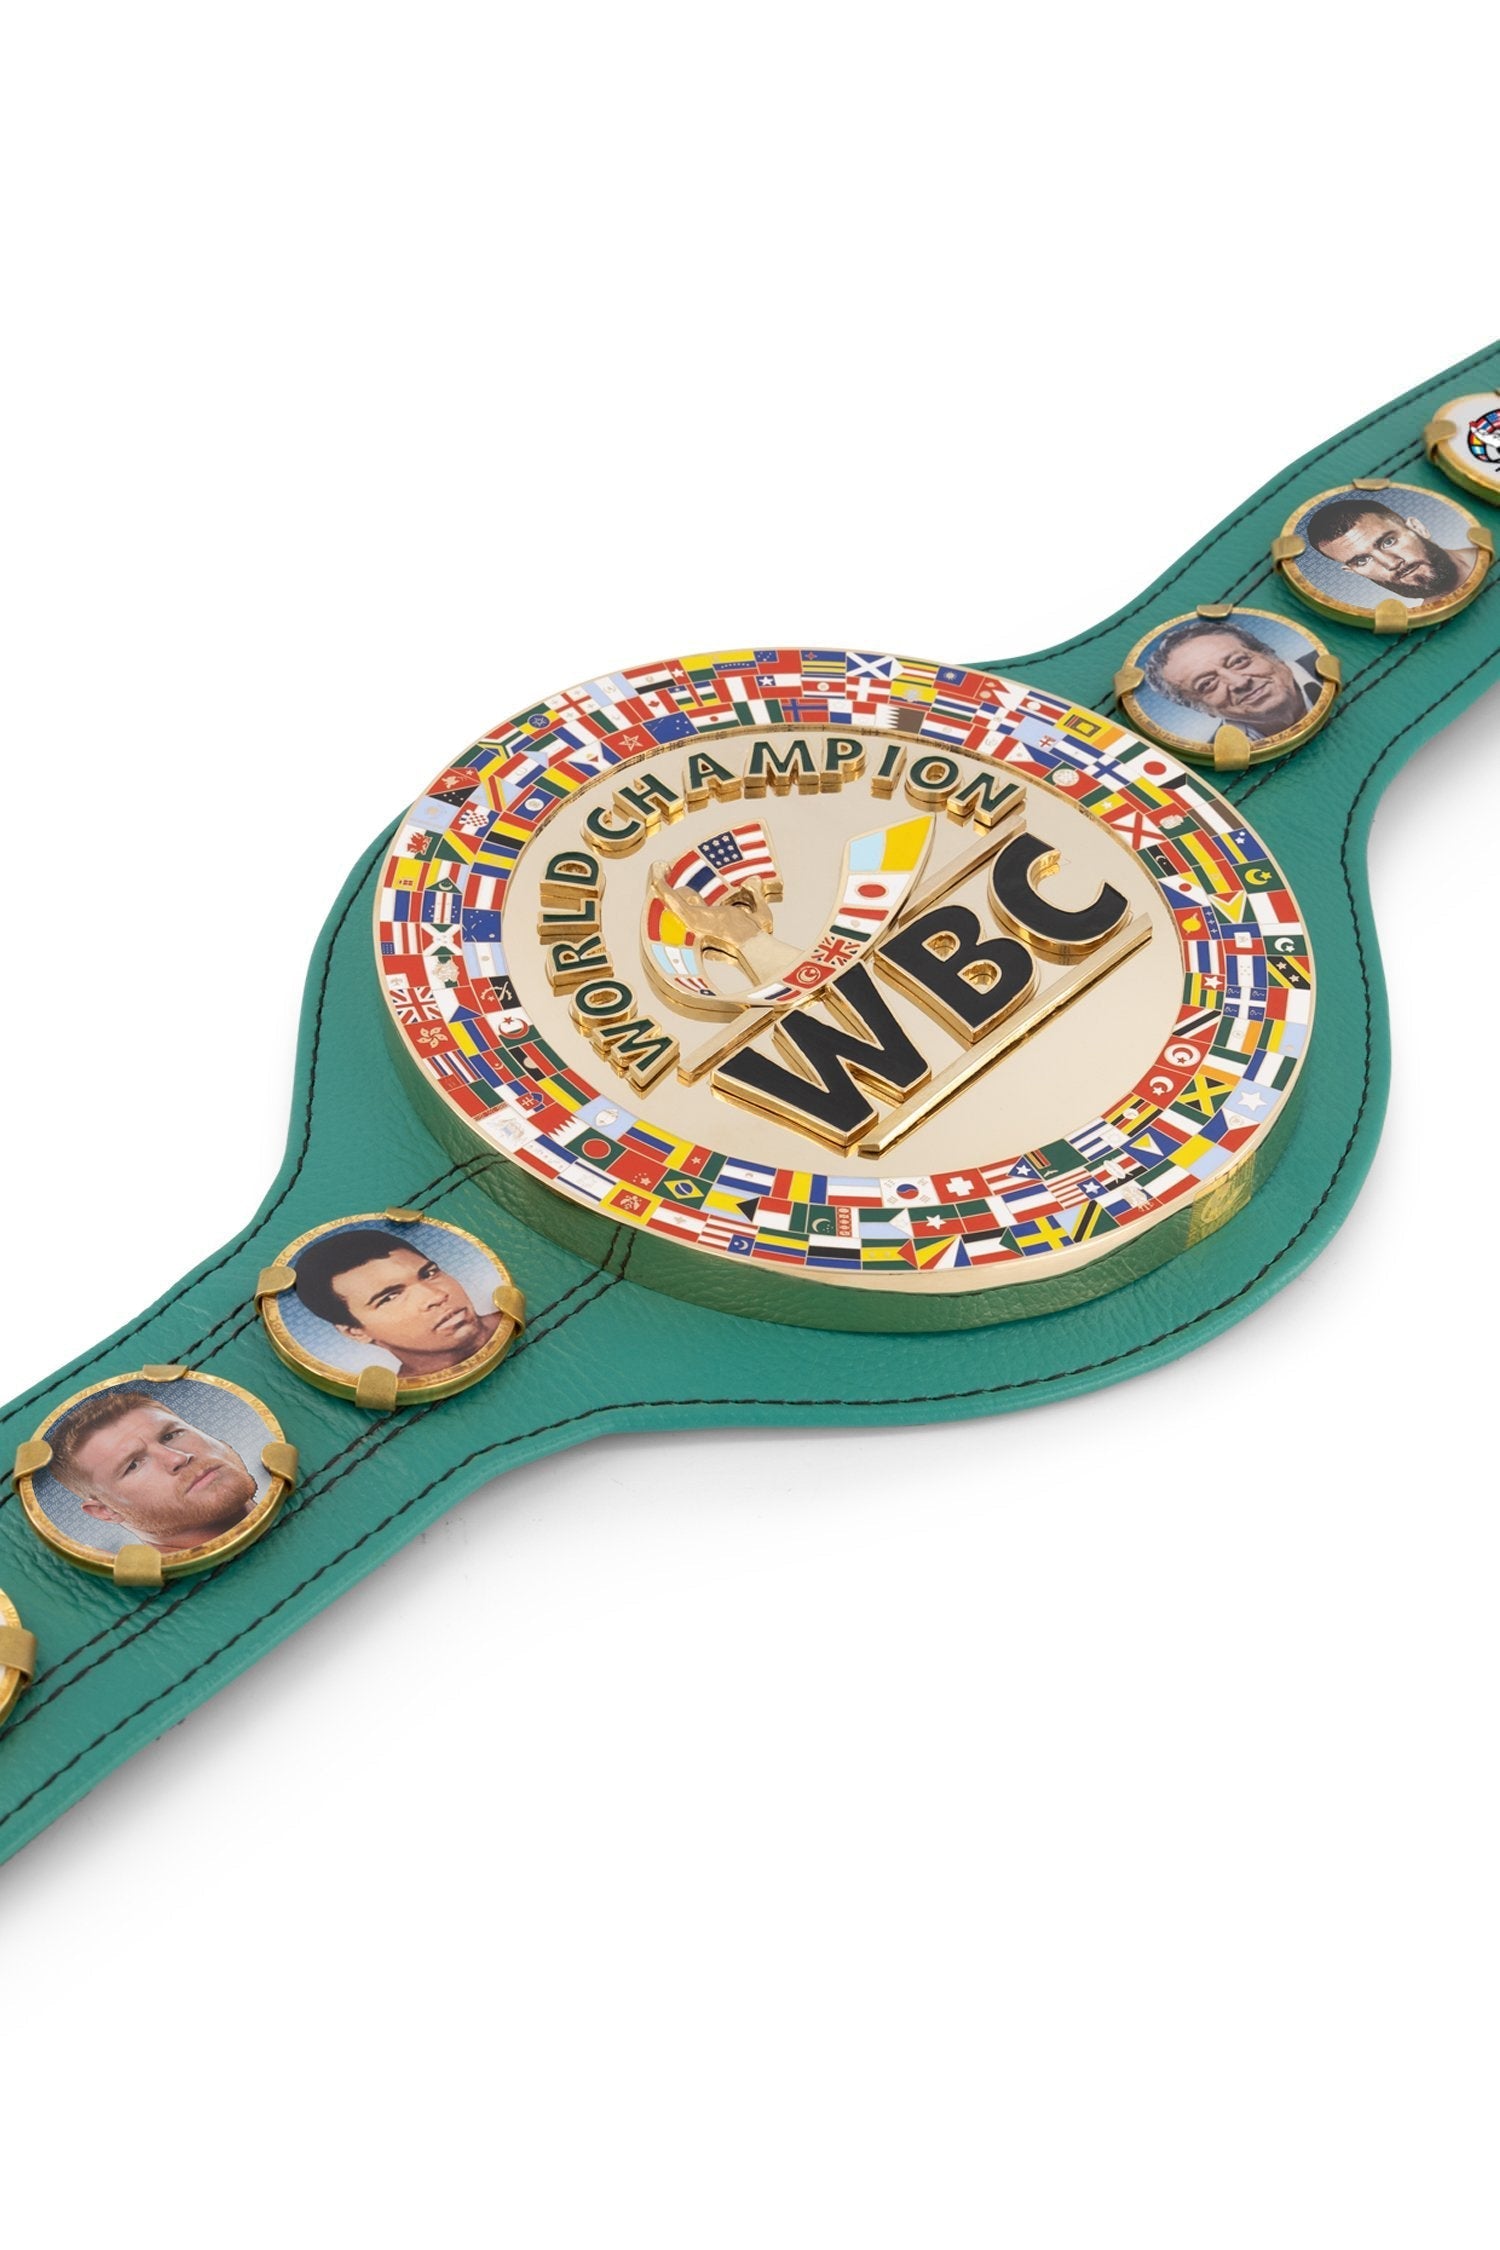 WBC Store Replica Belts WBC Championship Belt  "Historic Fights" Saúl “Canelo” Álvarez vs. Caleb Plant